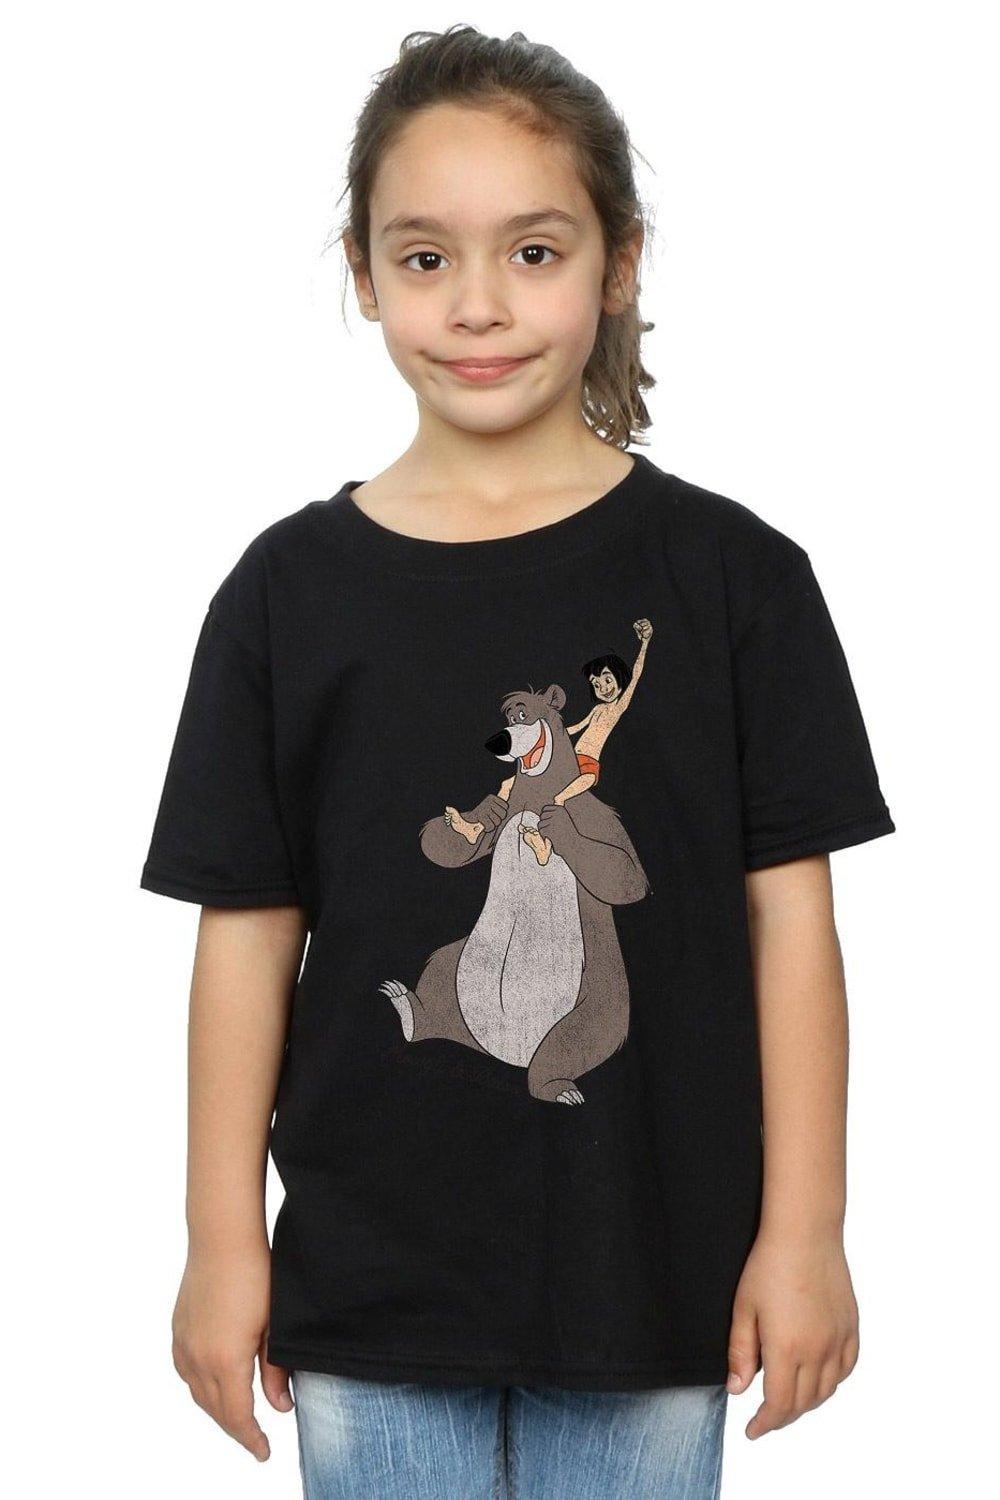 Mowgli And Baloo Cotton T-Shirt